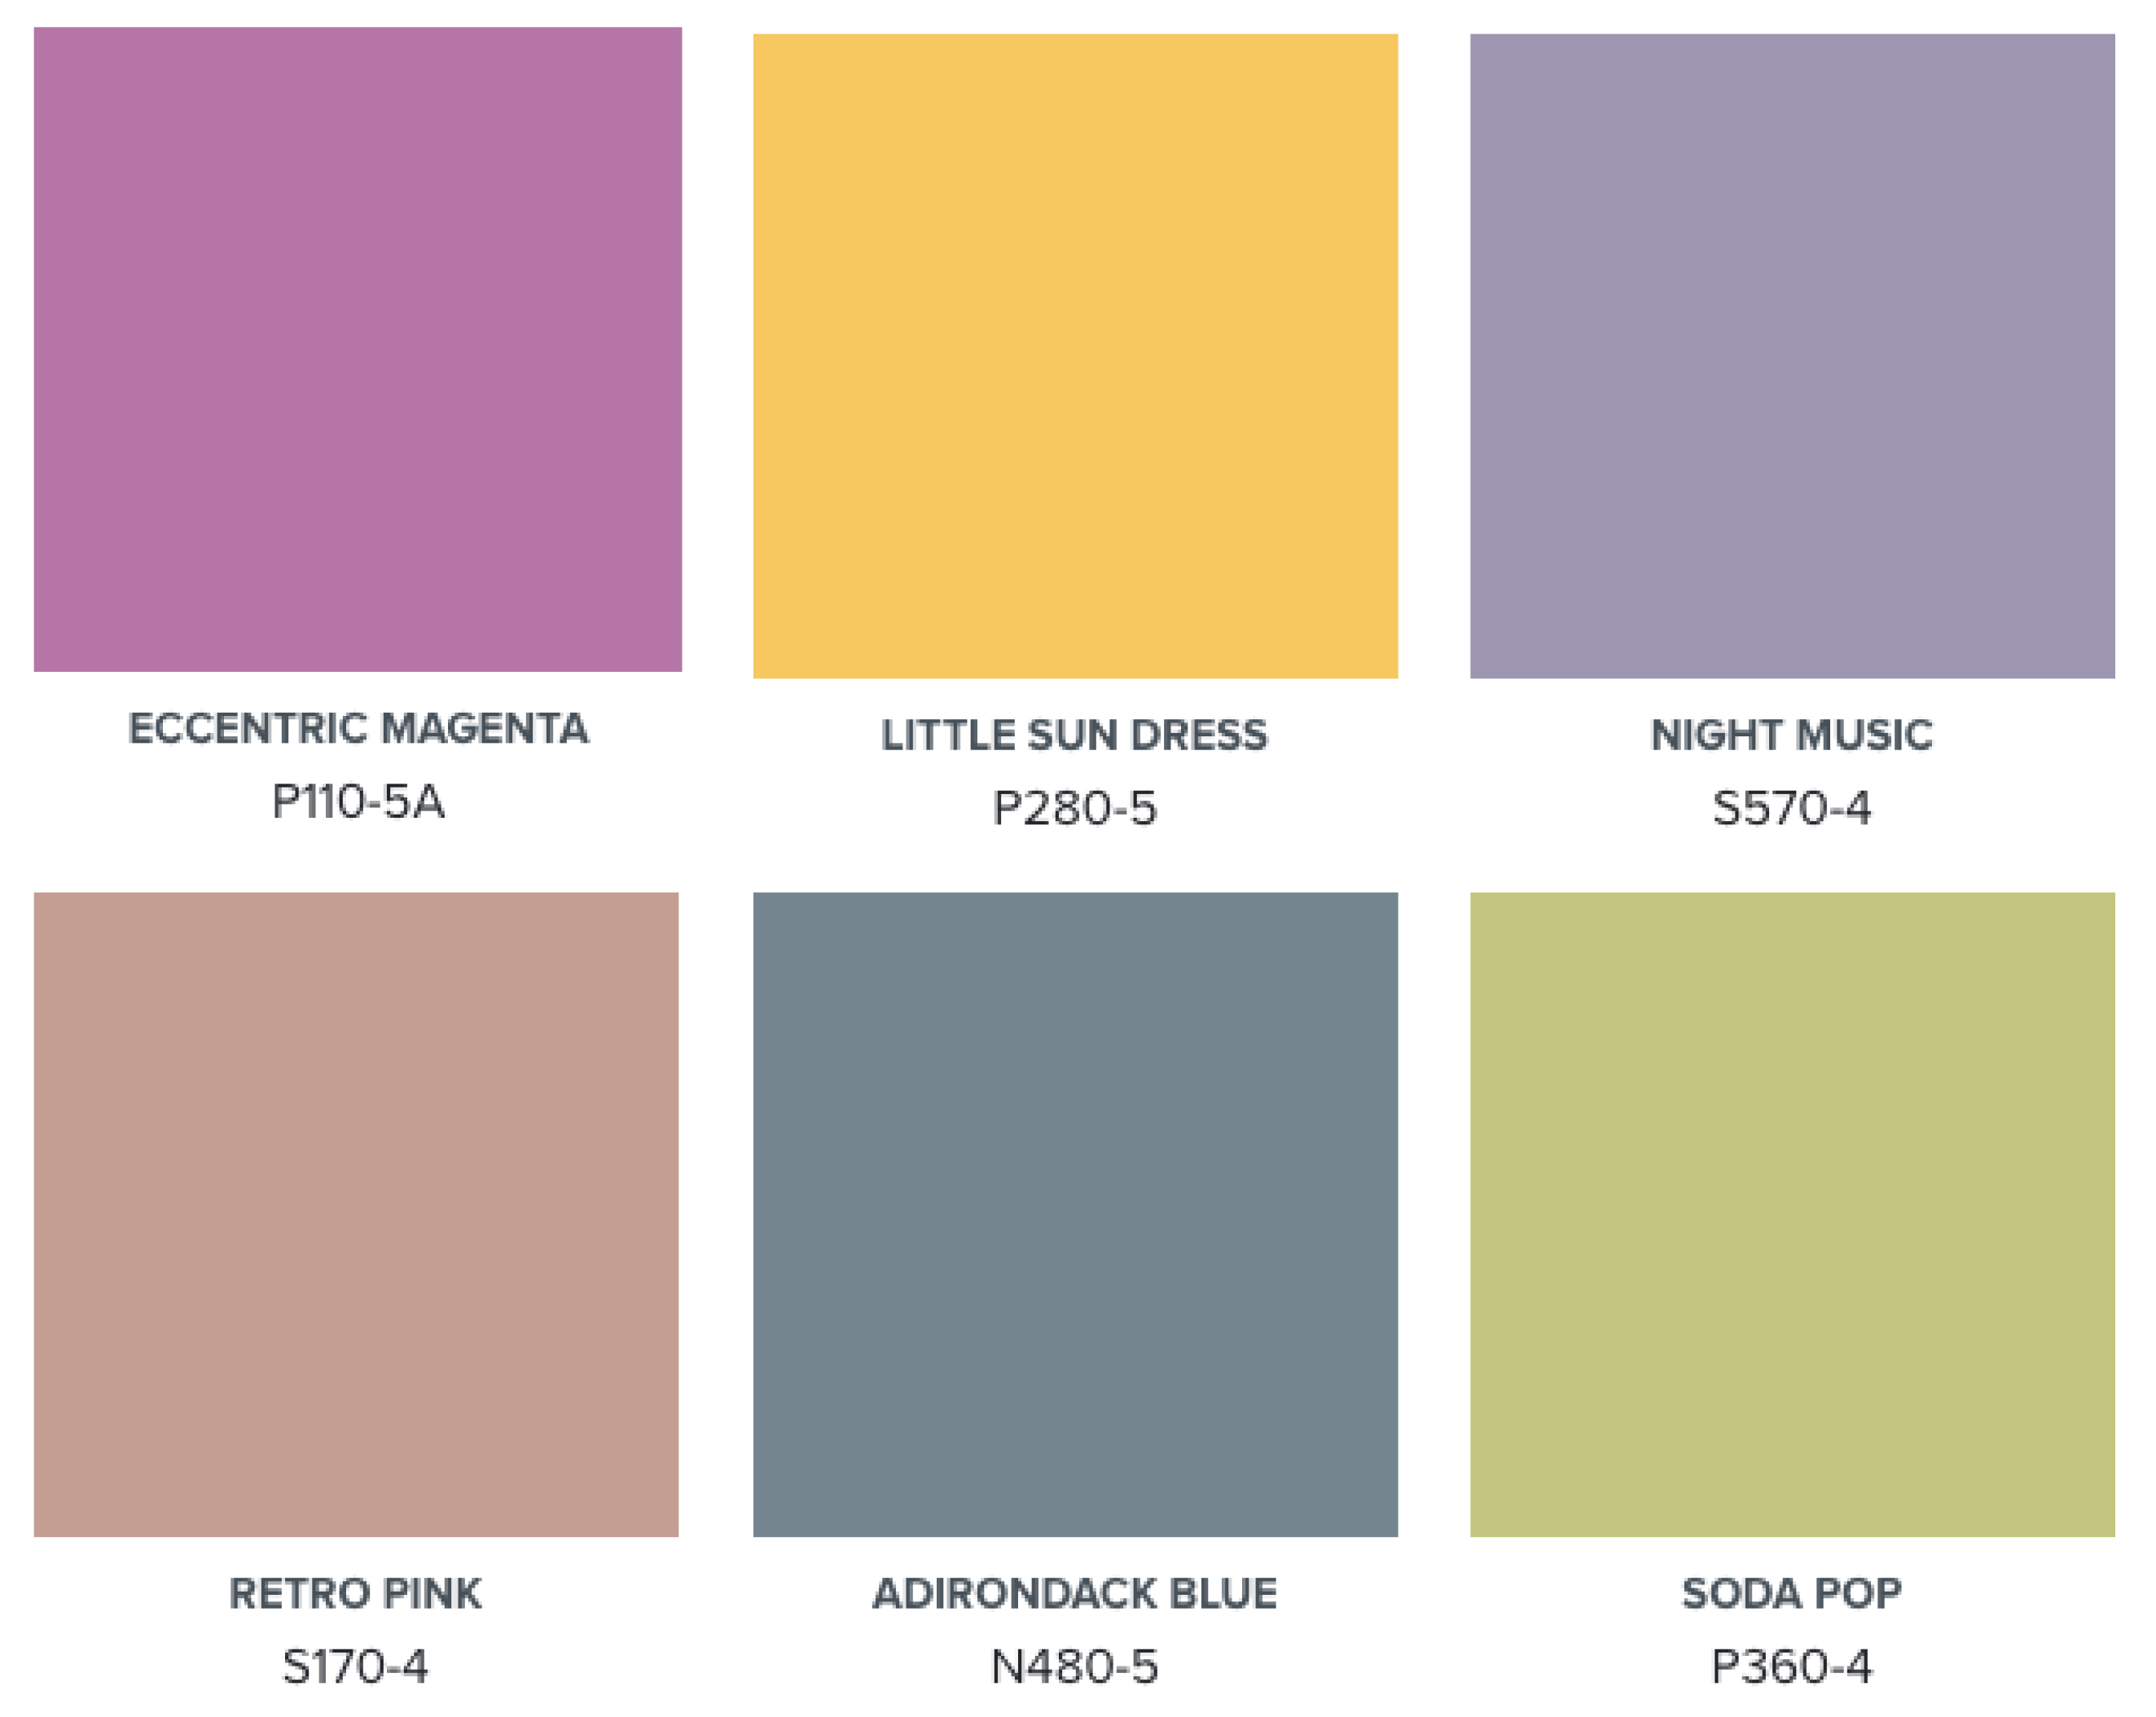 A colour palette showing Eccentric Magenta, Little Sun Dress, Night Music, Retro Pink, Adirondack Blue, and Soda Pop